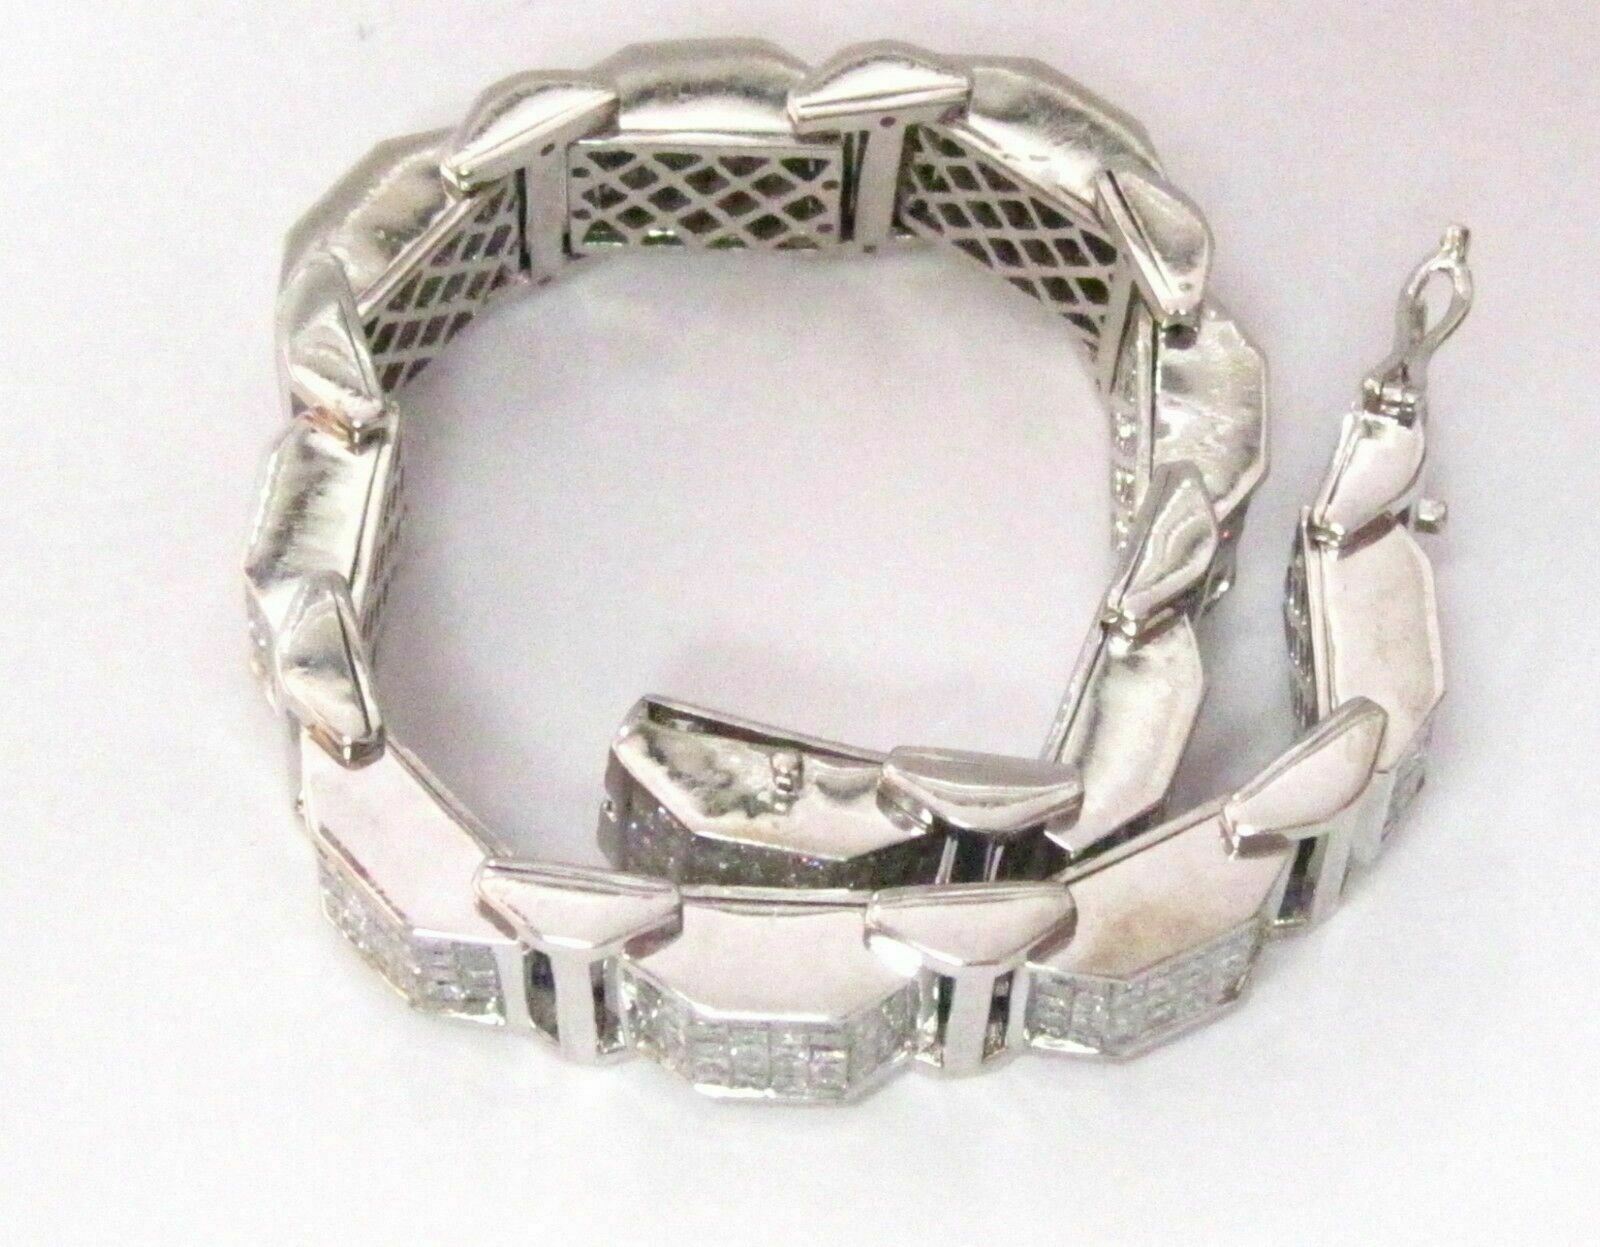 Louis Vuitton Chain Bracelet Engraved Monogram Silver